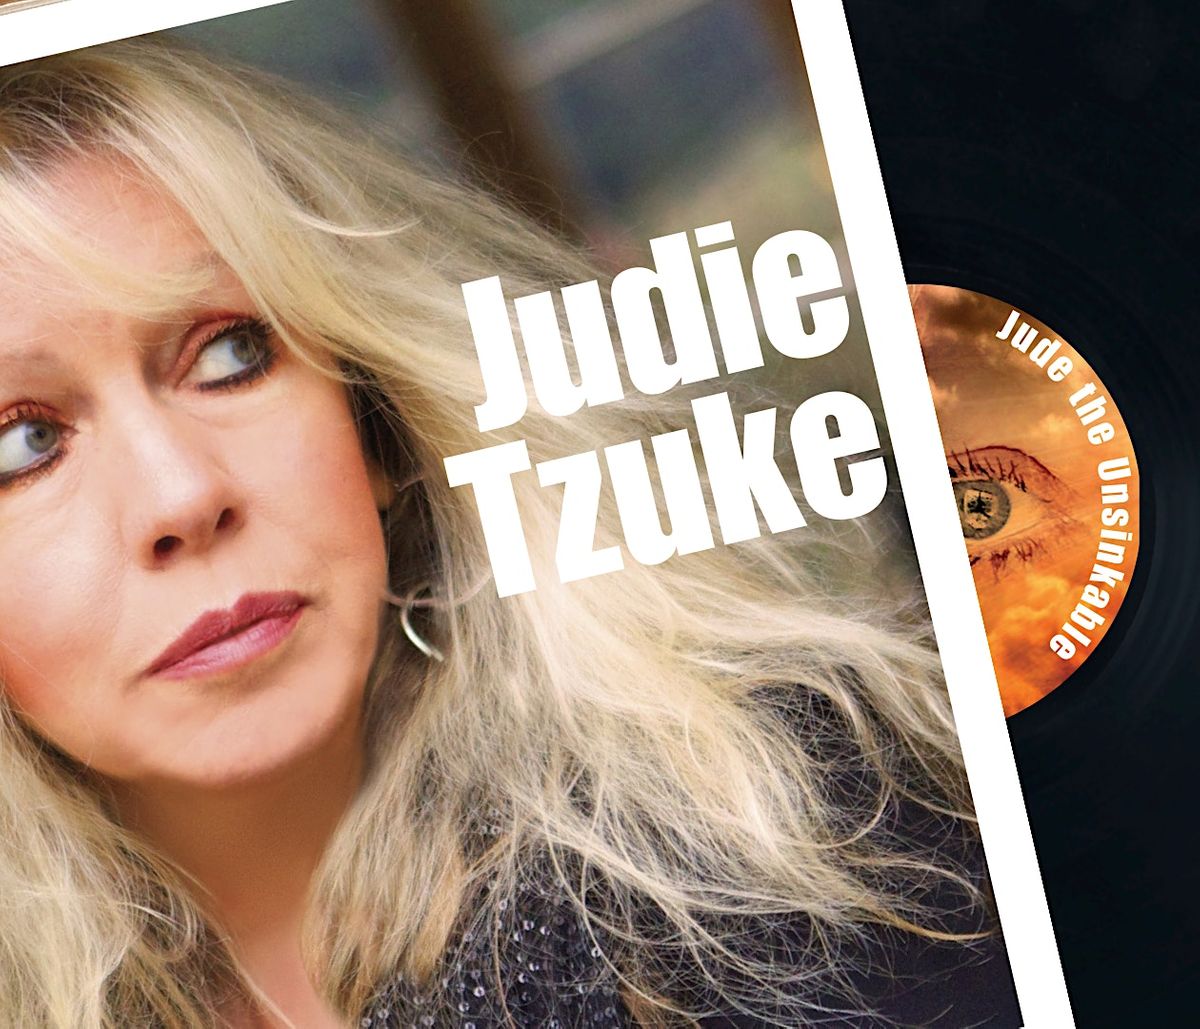 Judie Tzuke - Jude the Unsinkable